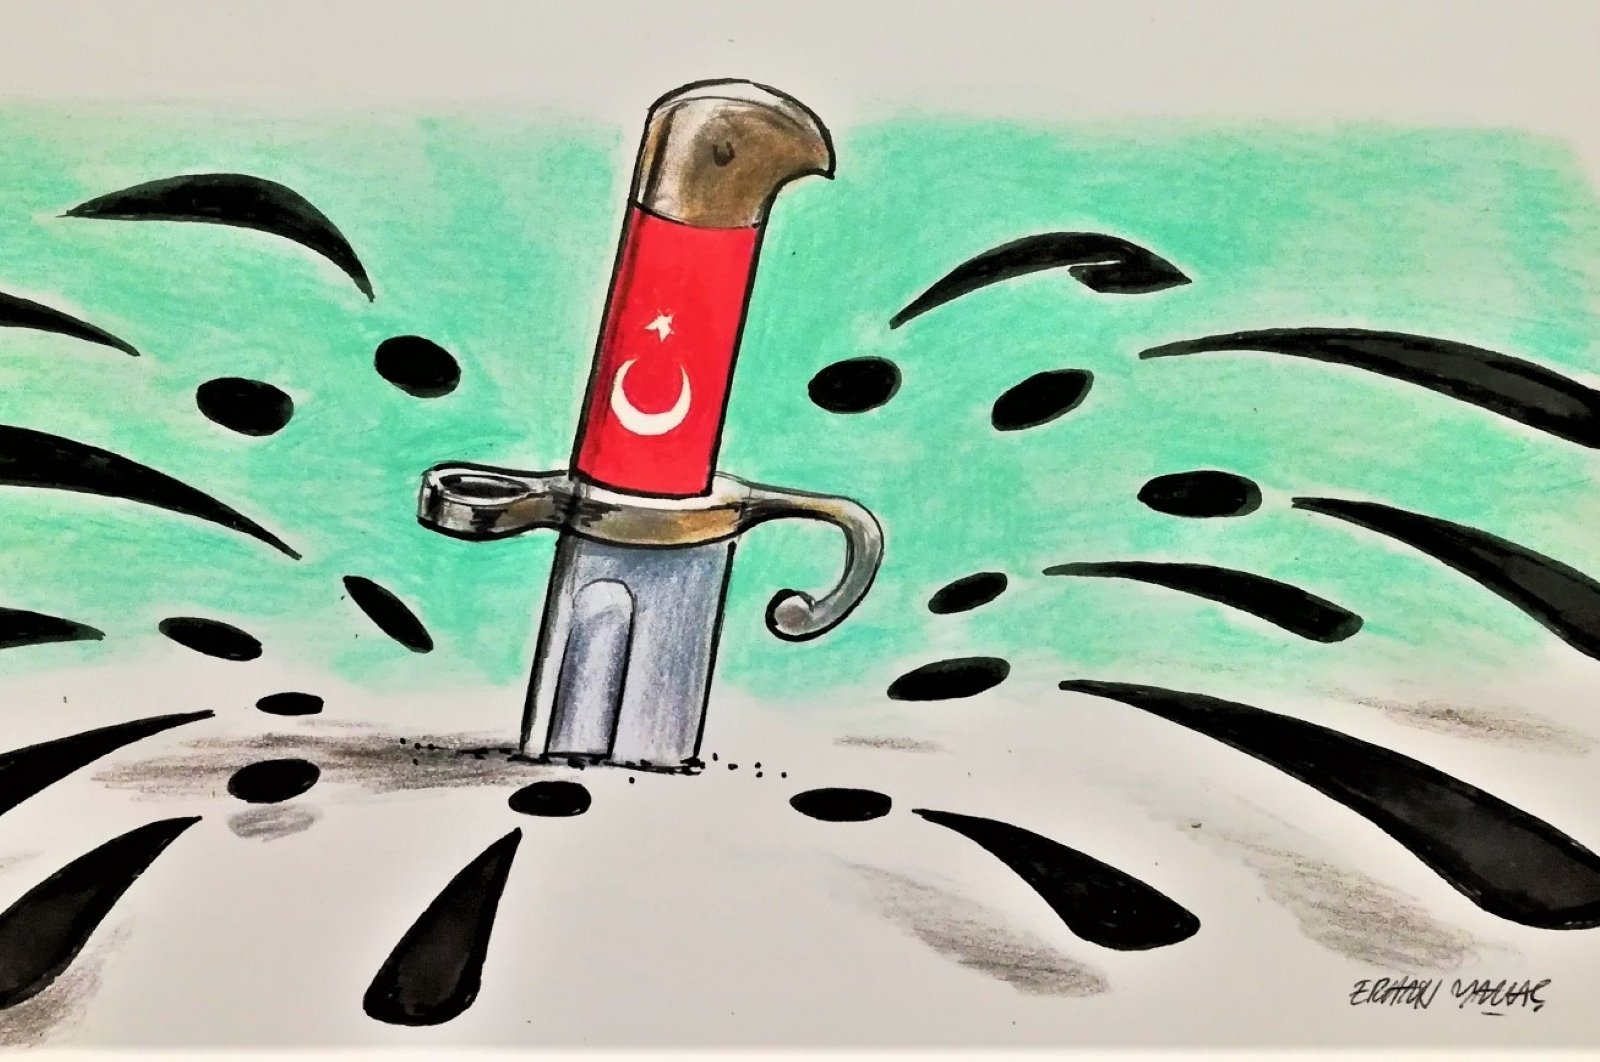 Illustration by Erhan Yalvaç